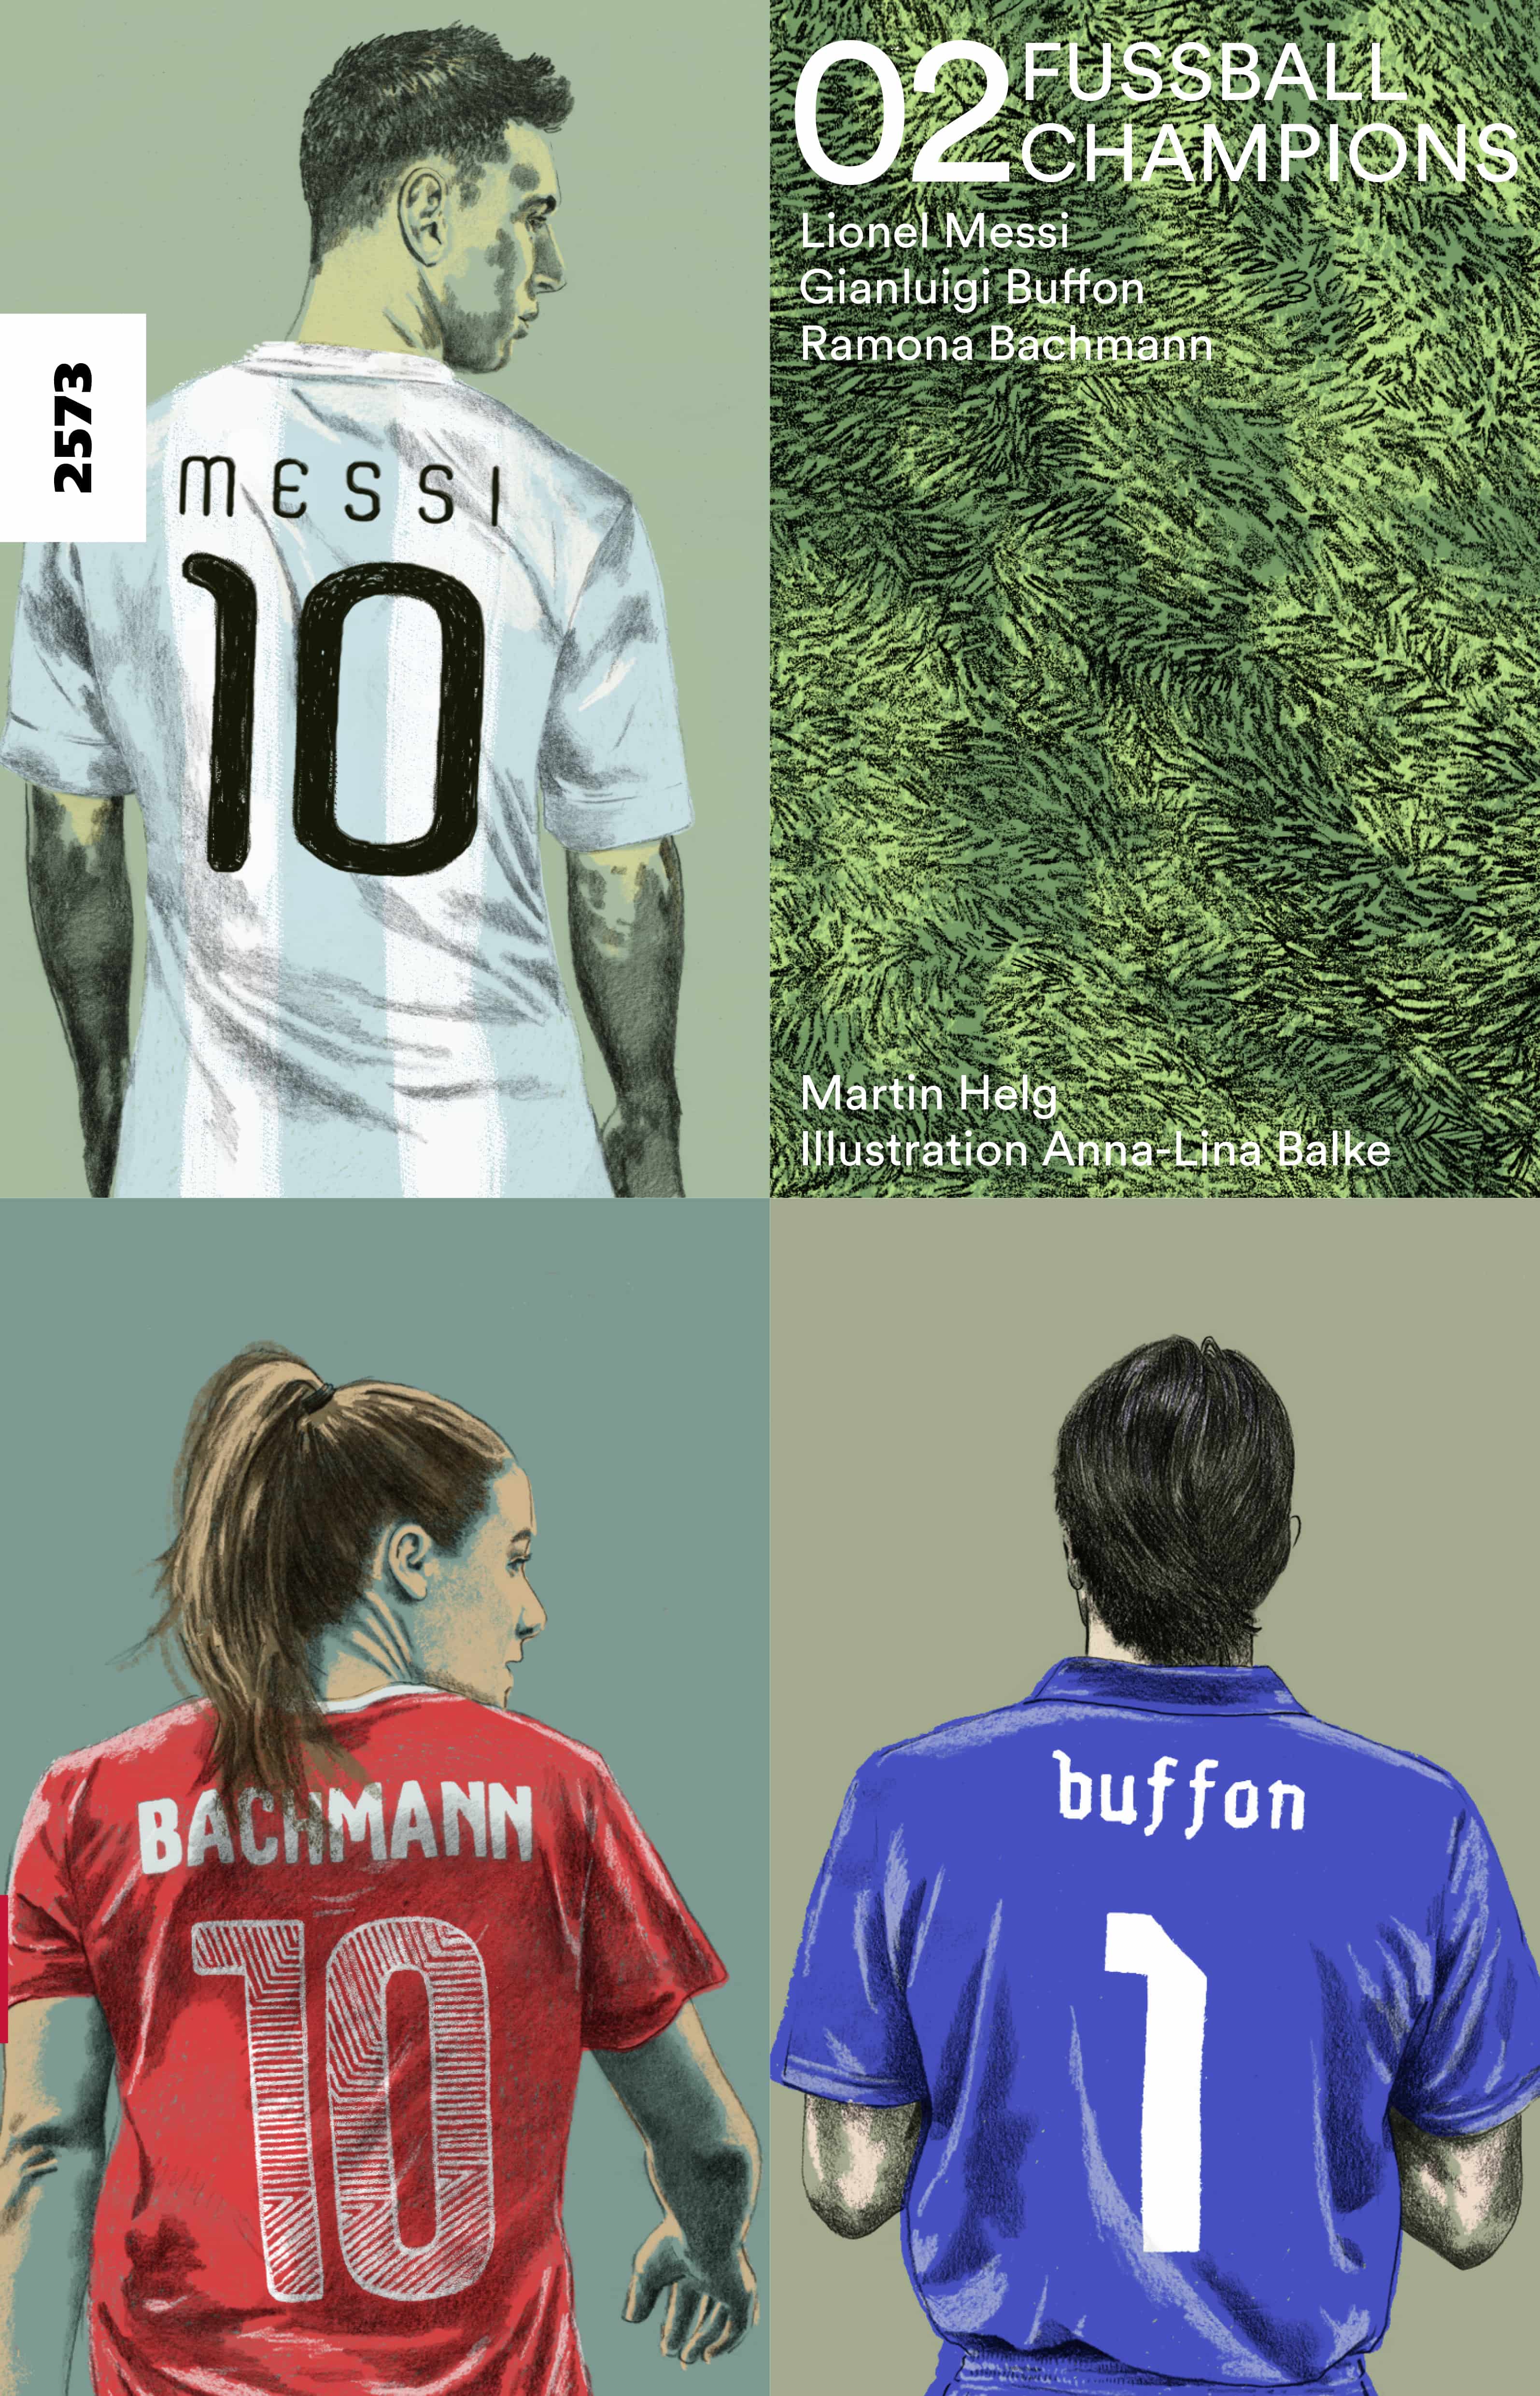 Fussballchampions 02 – Lionel Messi, Gianluigi Buffon, Ramona Bachmann